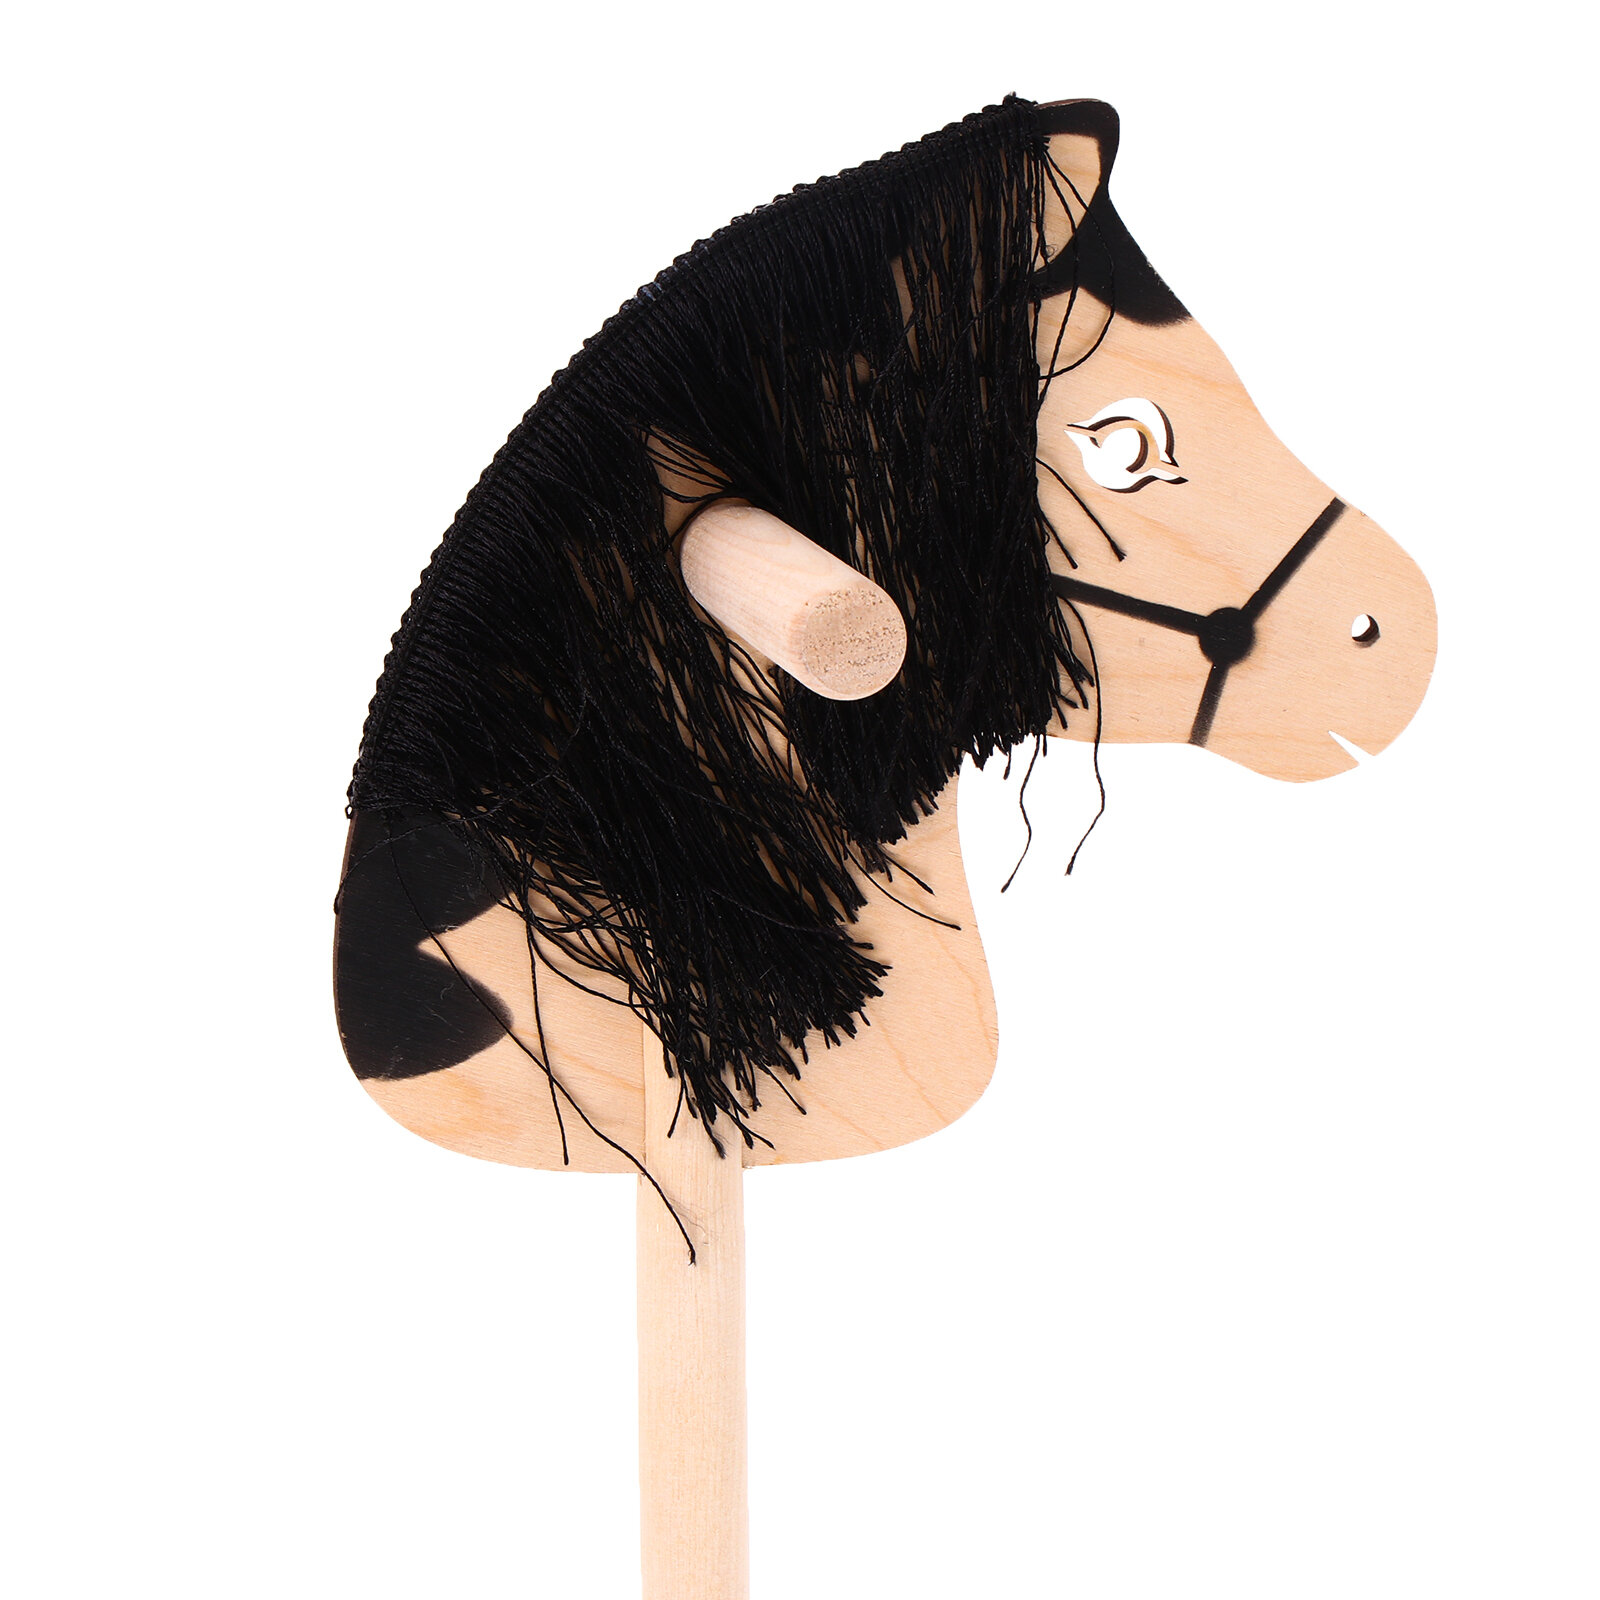 Игрушка «Лошадка на палке» с волосами, длина: 100 см